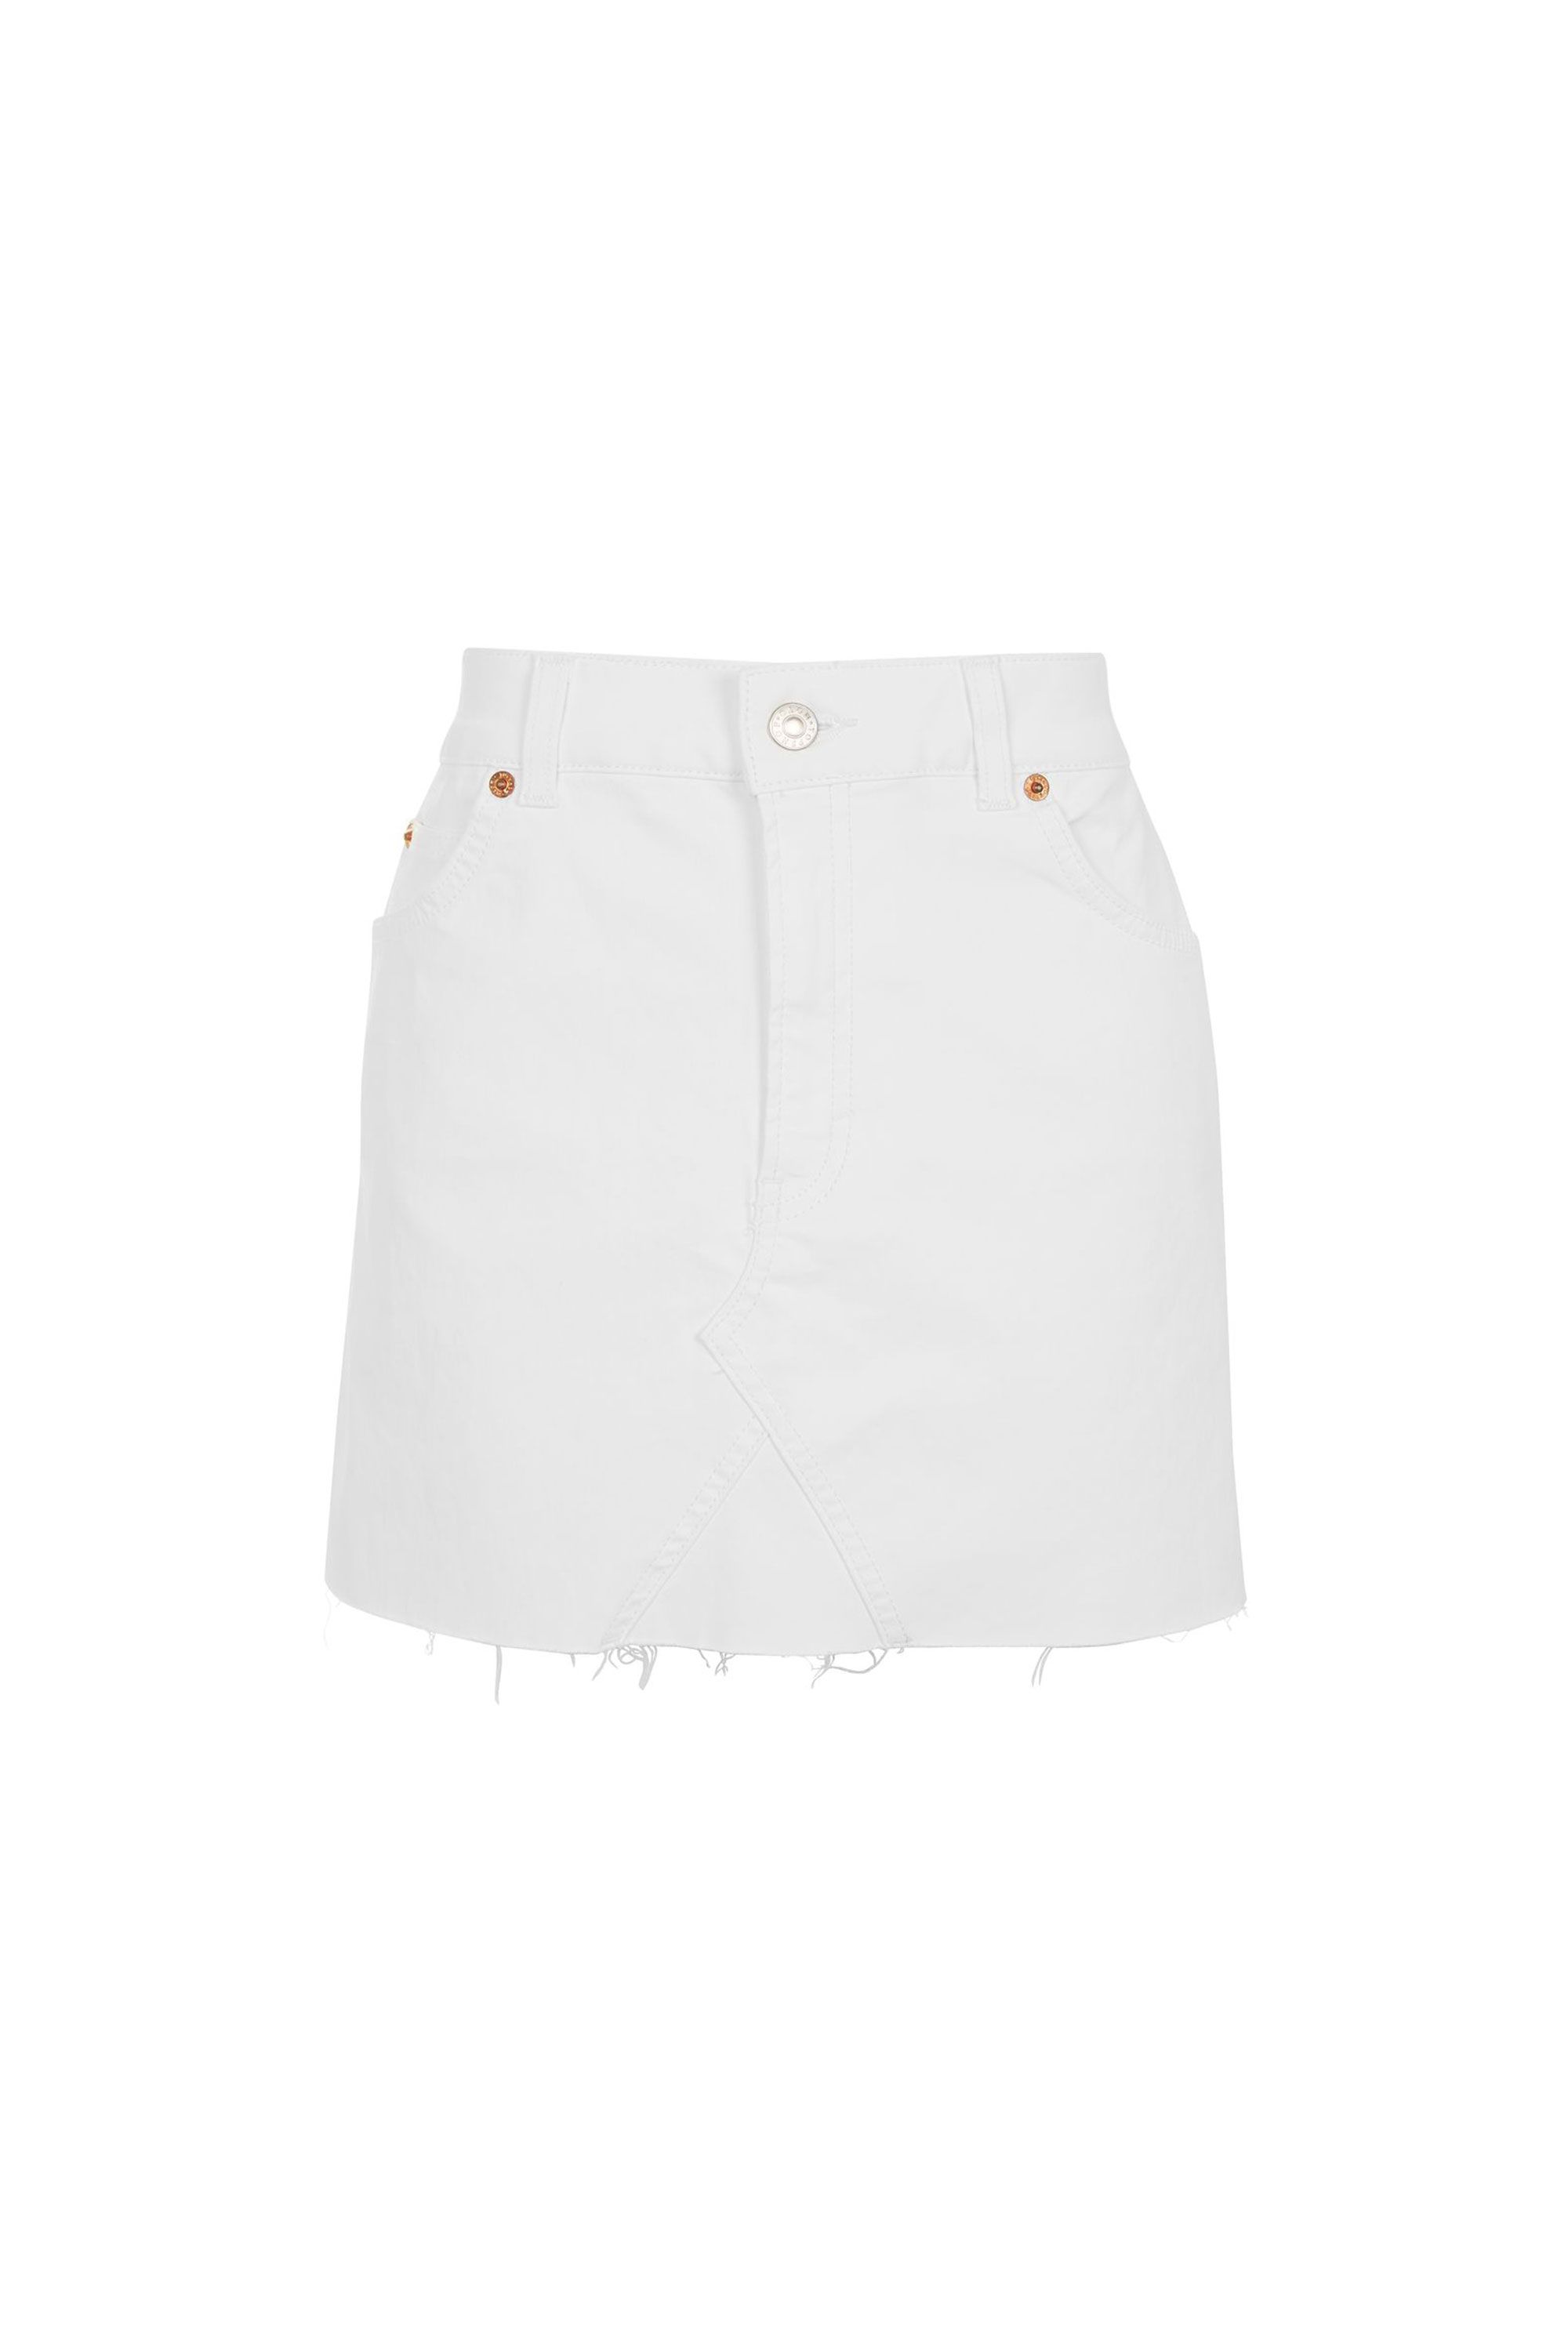 Topshop white denim skirt with red & white stripe on... - Depop